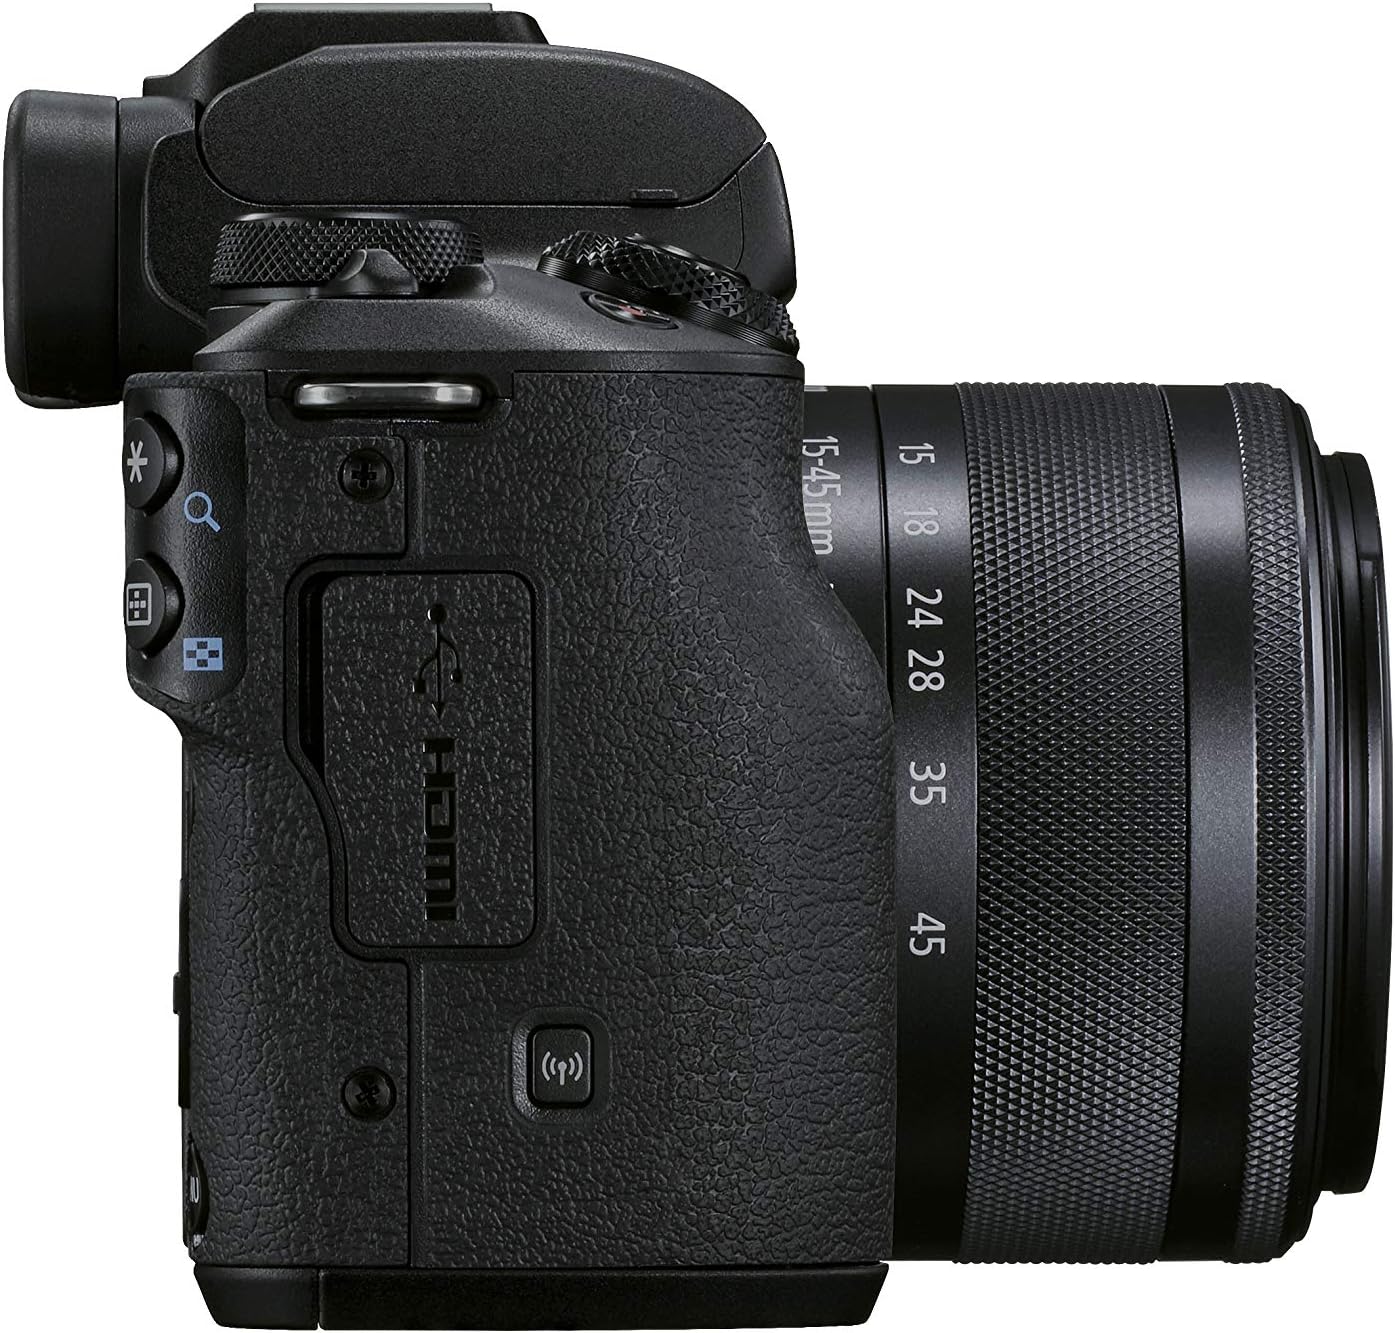 Canon EOS M50 Mark II Mirrorless Digital Camera + 15-45mm Lens - Black